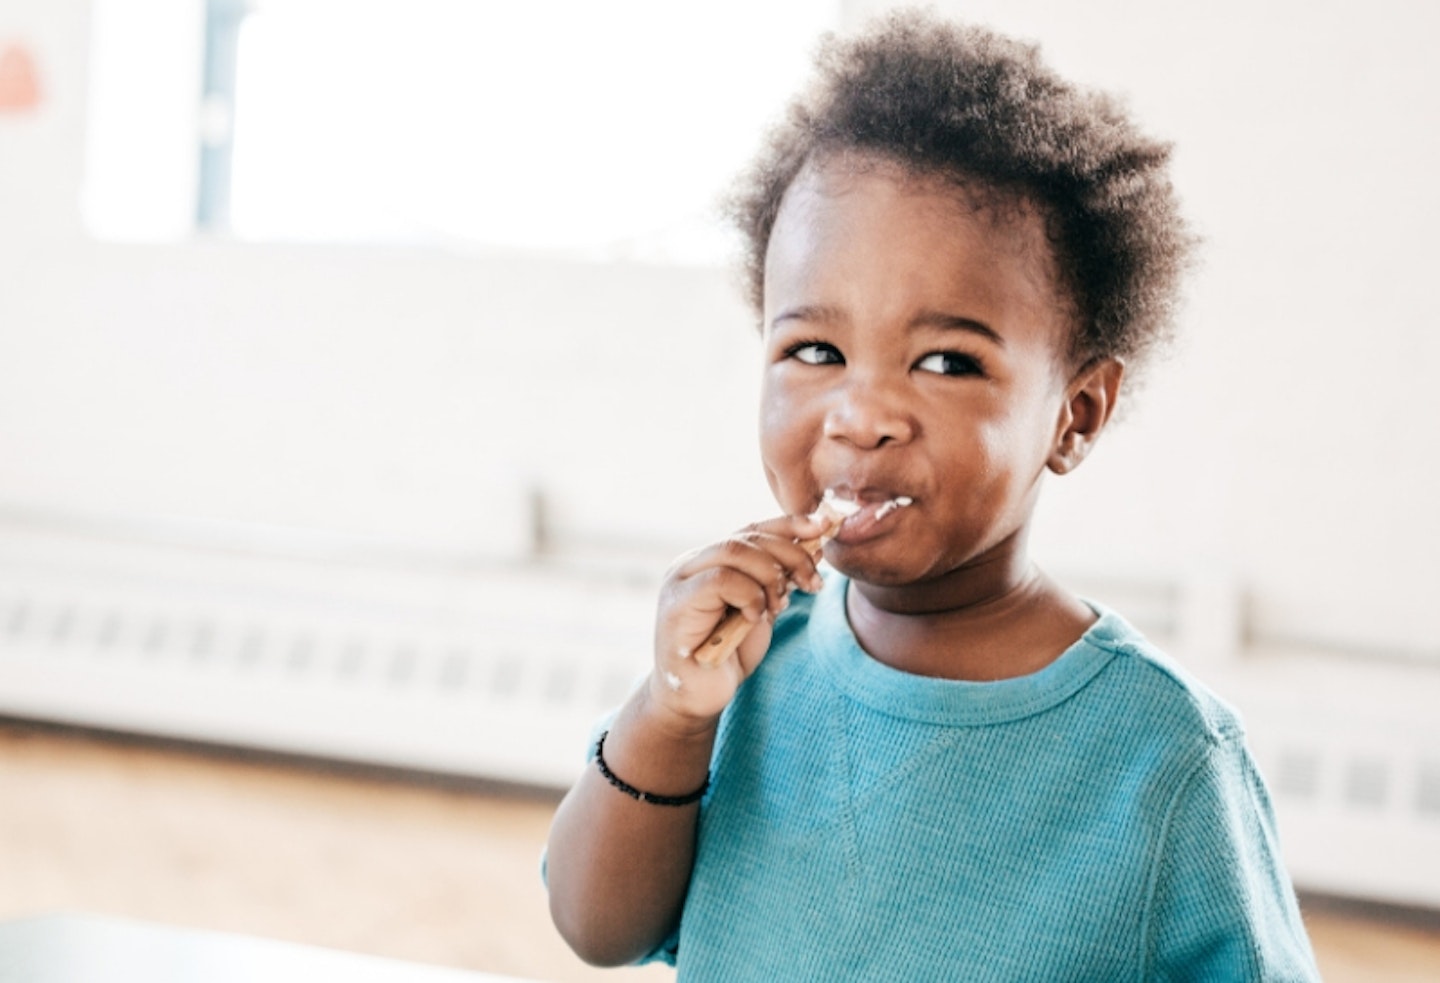 child eating healthy breakfast